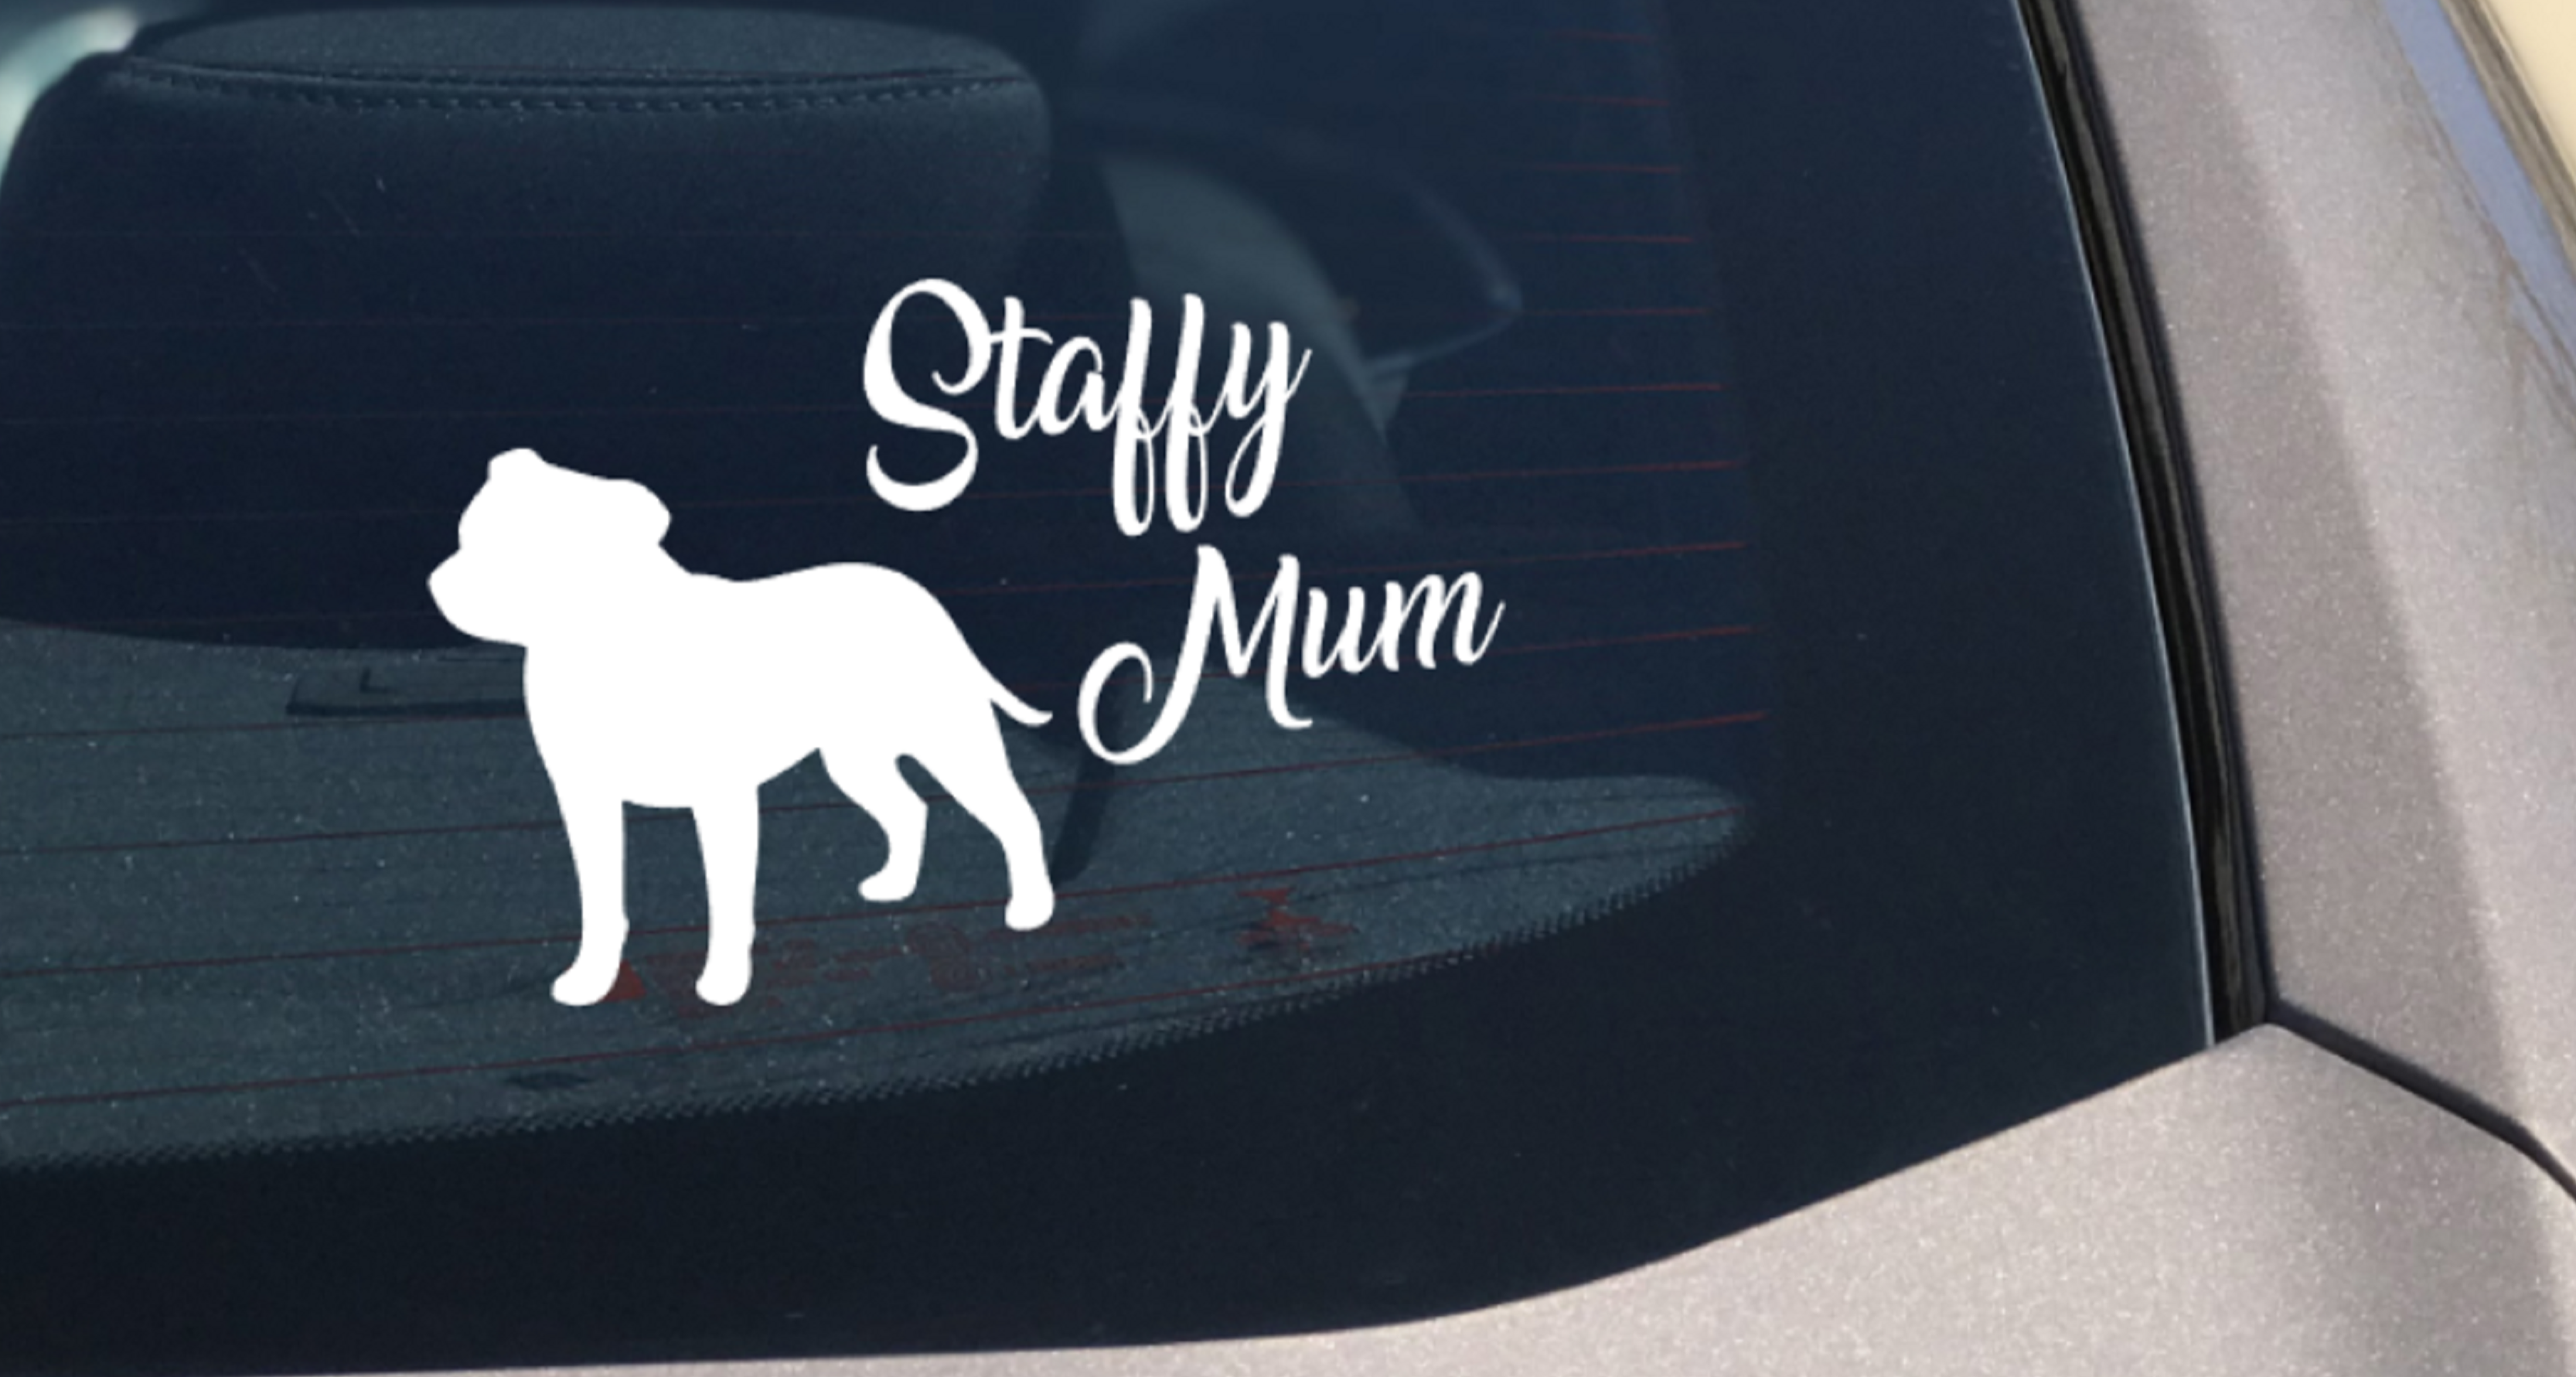 Staffy Mum car Sticker, Staffordshire Terrier Mum Car Decal Sticker. Love Staffy. Dog Mum Decal. Dog Mom Sticker - My Crafty Dog